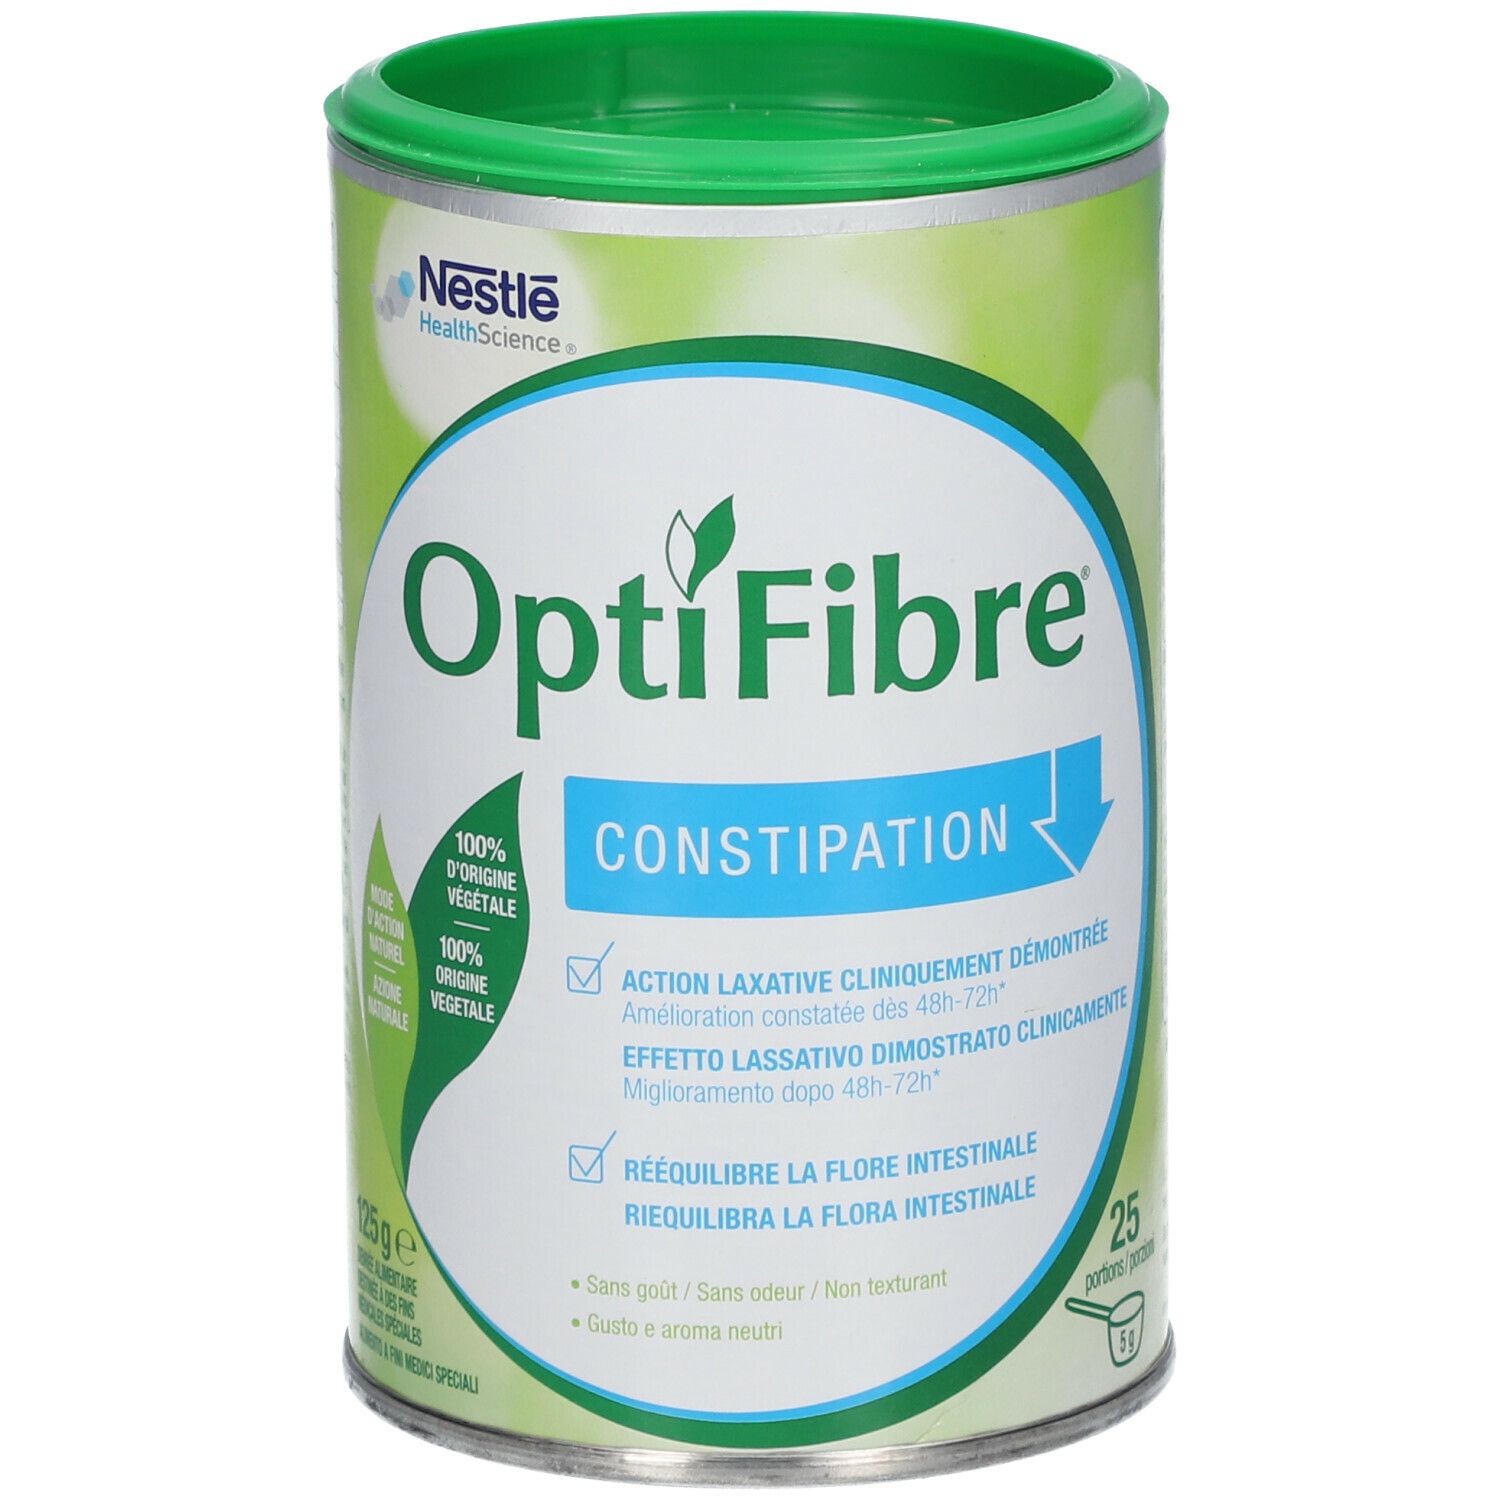 OptiFibre® Constipation